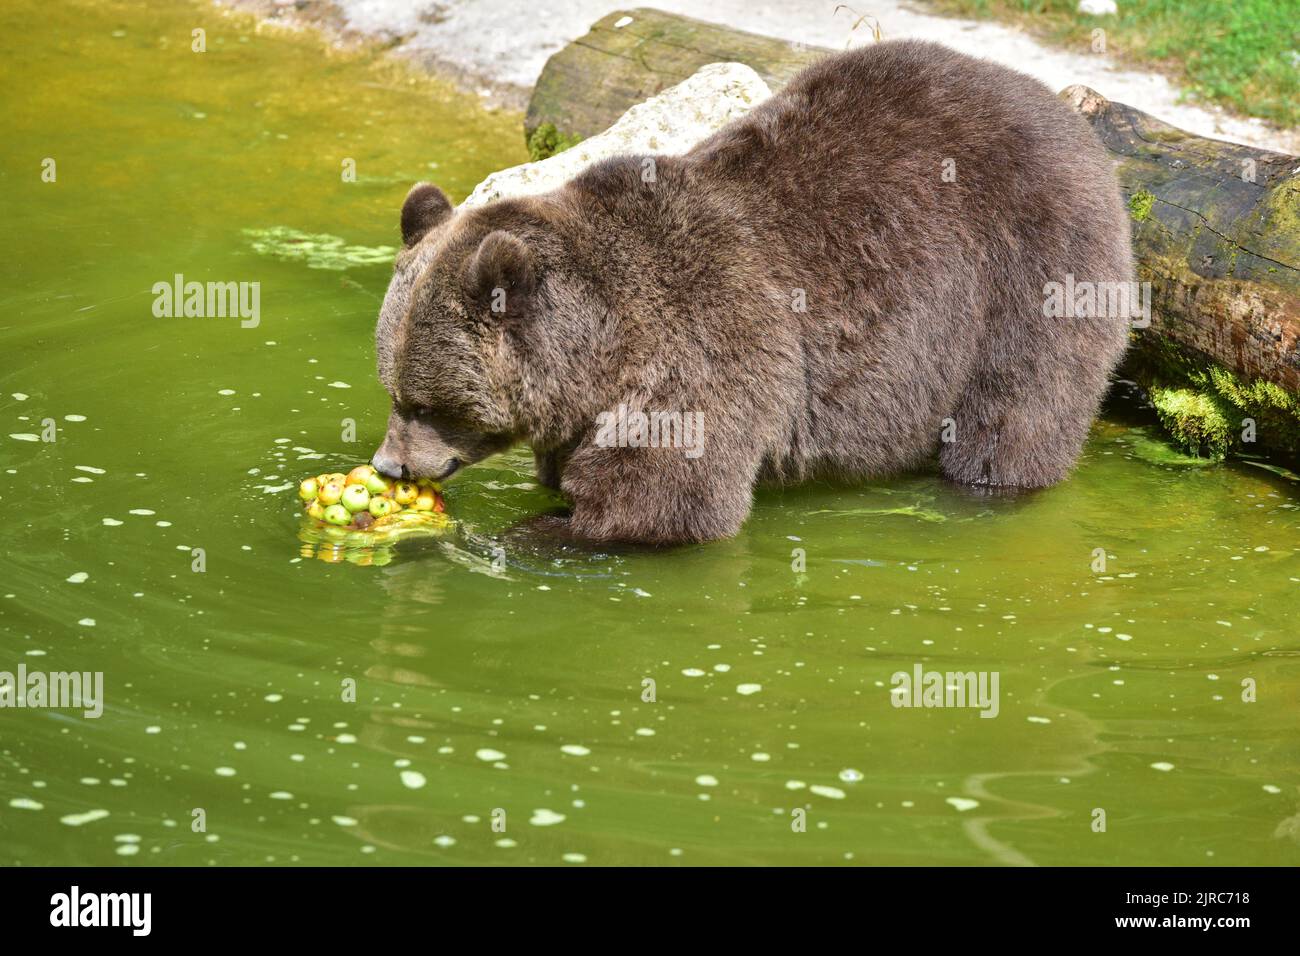 Braunbär im Wildpark a Grünau im Almtal, Österreich - orso bruno nel parco faunistico di Grünau im Almtal, Austria Foto Stock